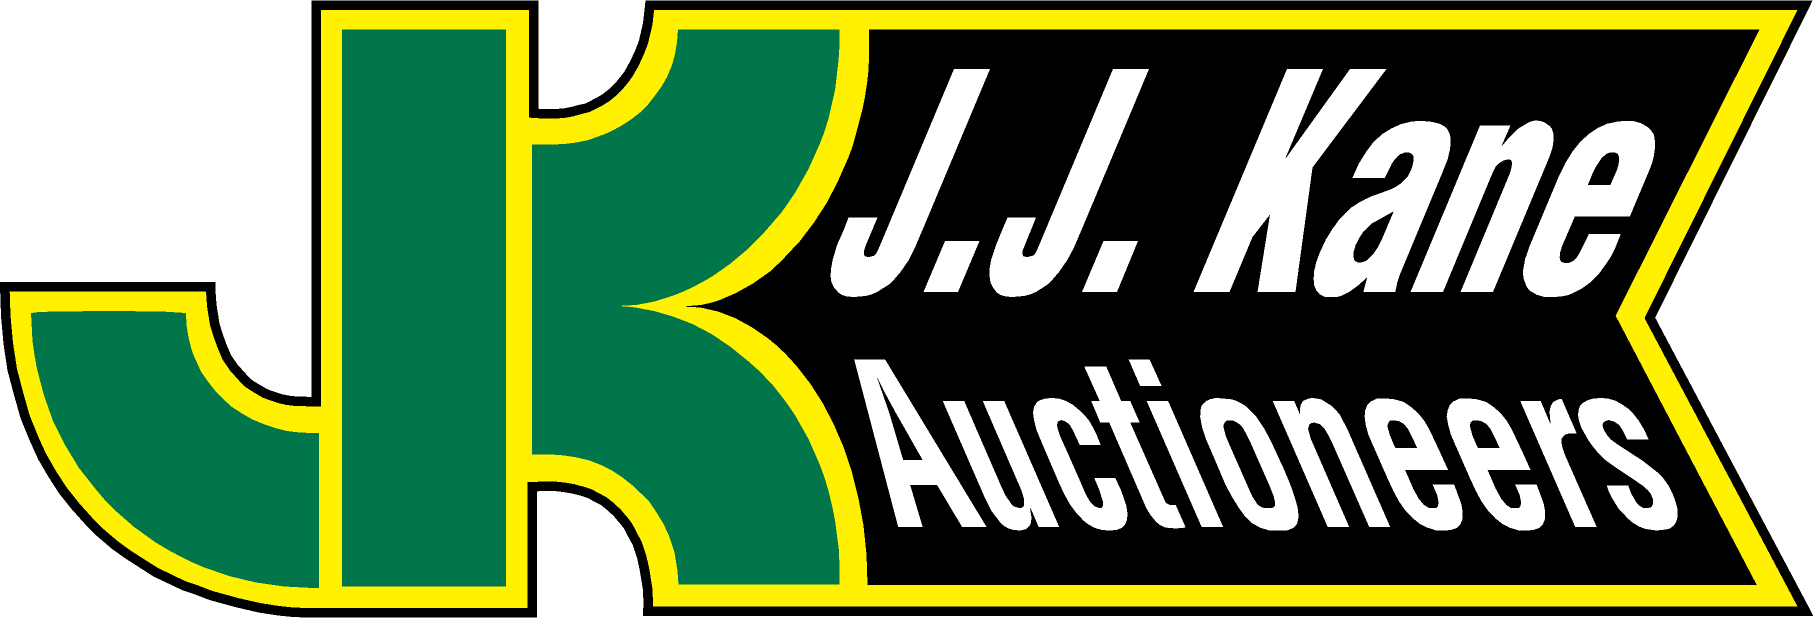 Philadelphia, PA Fleet Vehicle Auction August 16th 2014